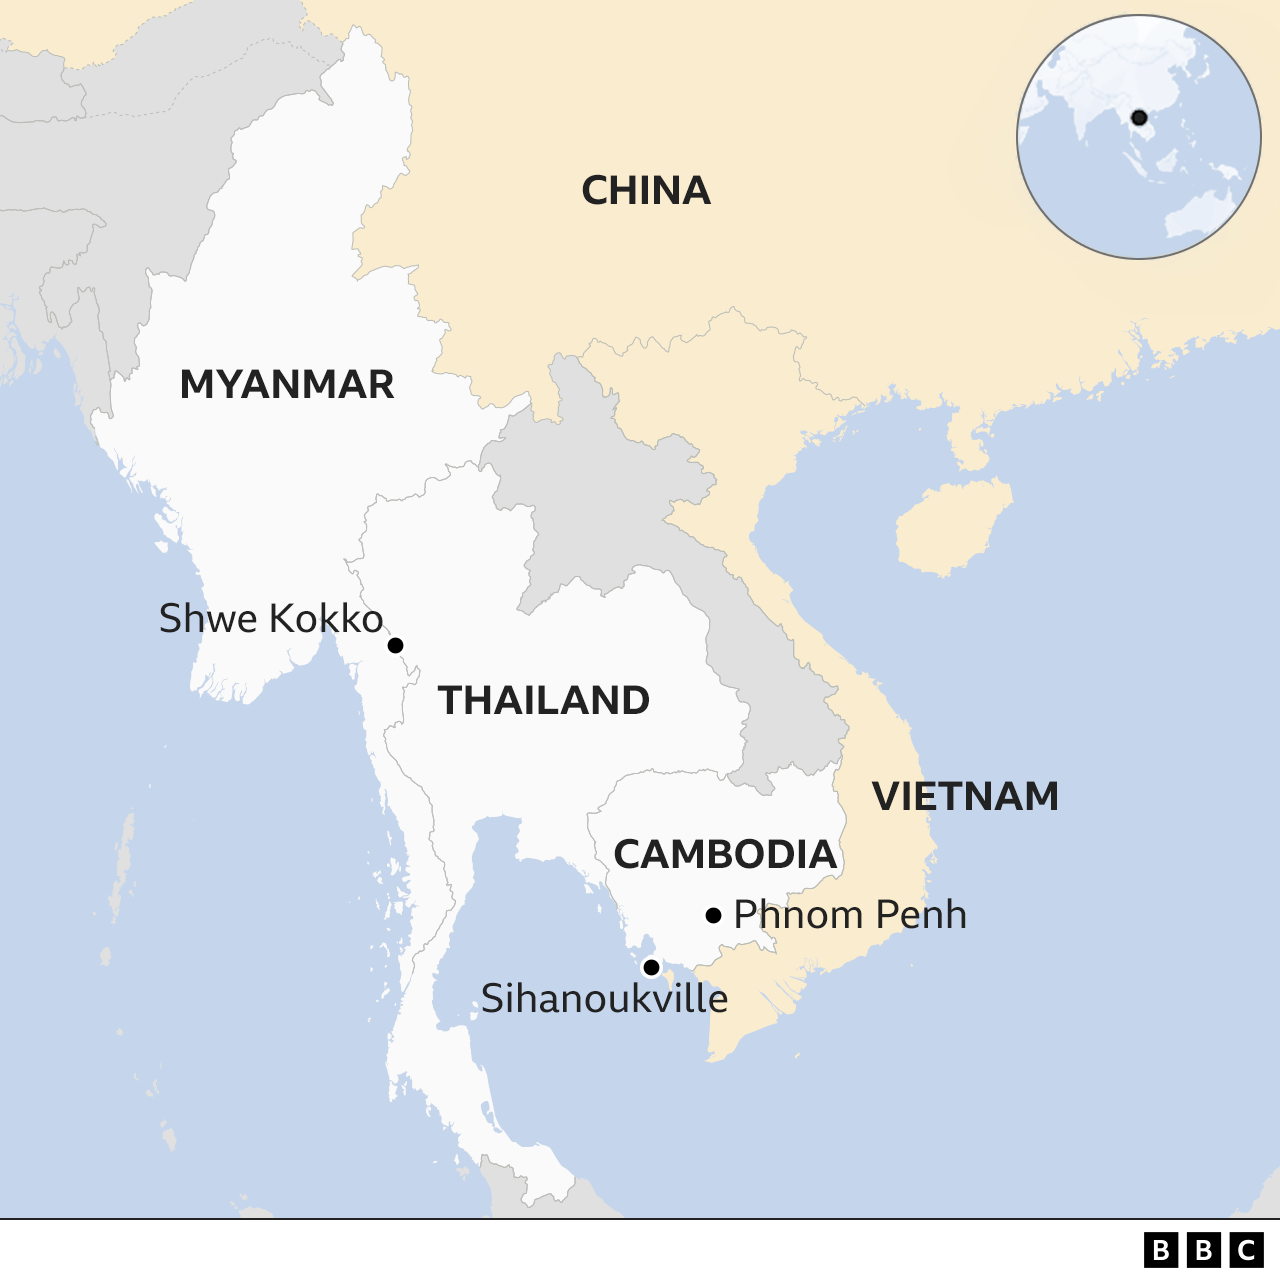 Map showing Shwe Kokko, Sihanoukville and Phnom Penh